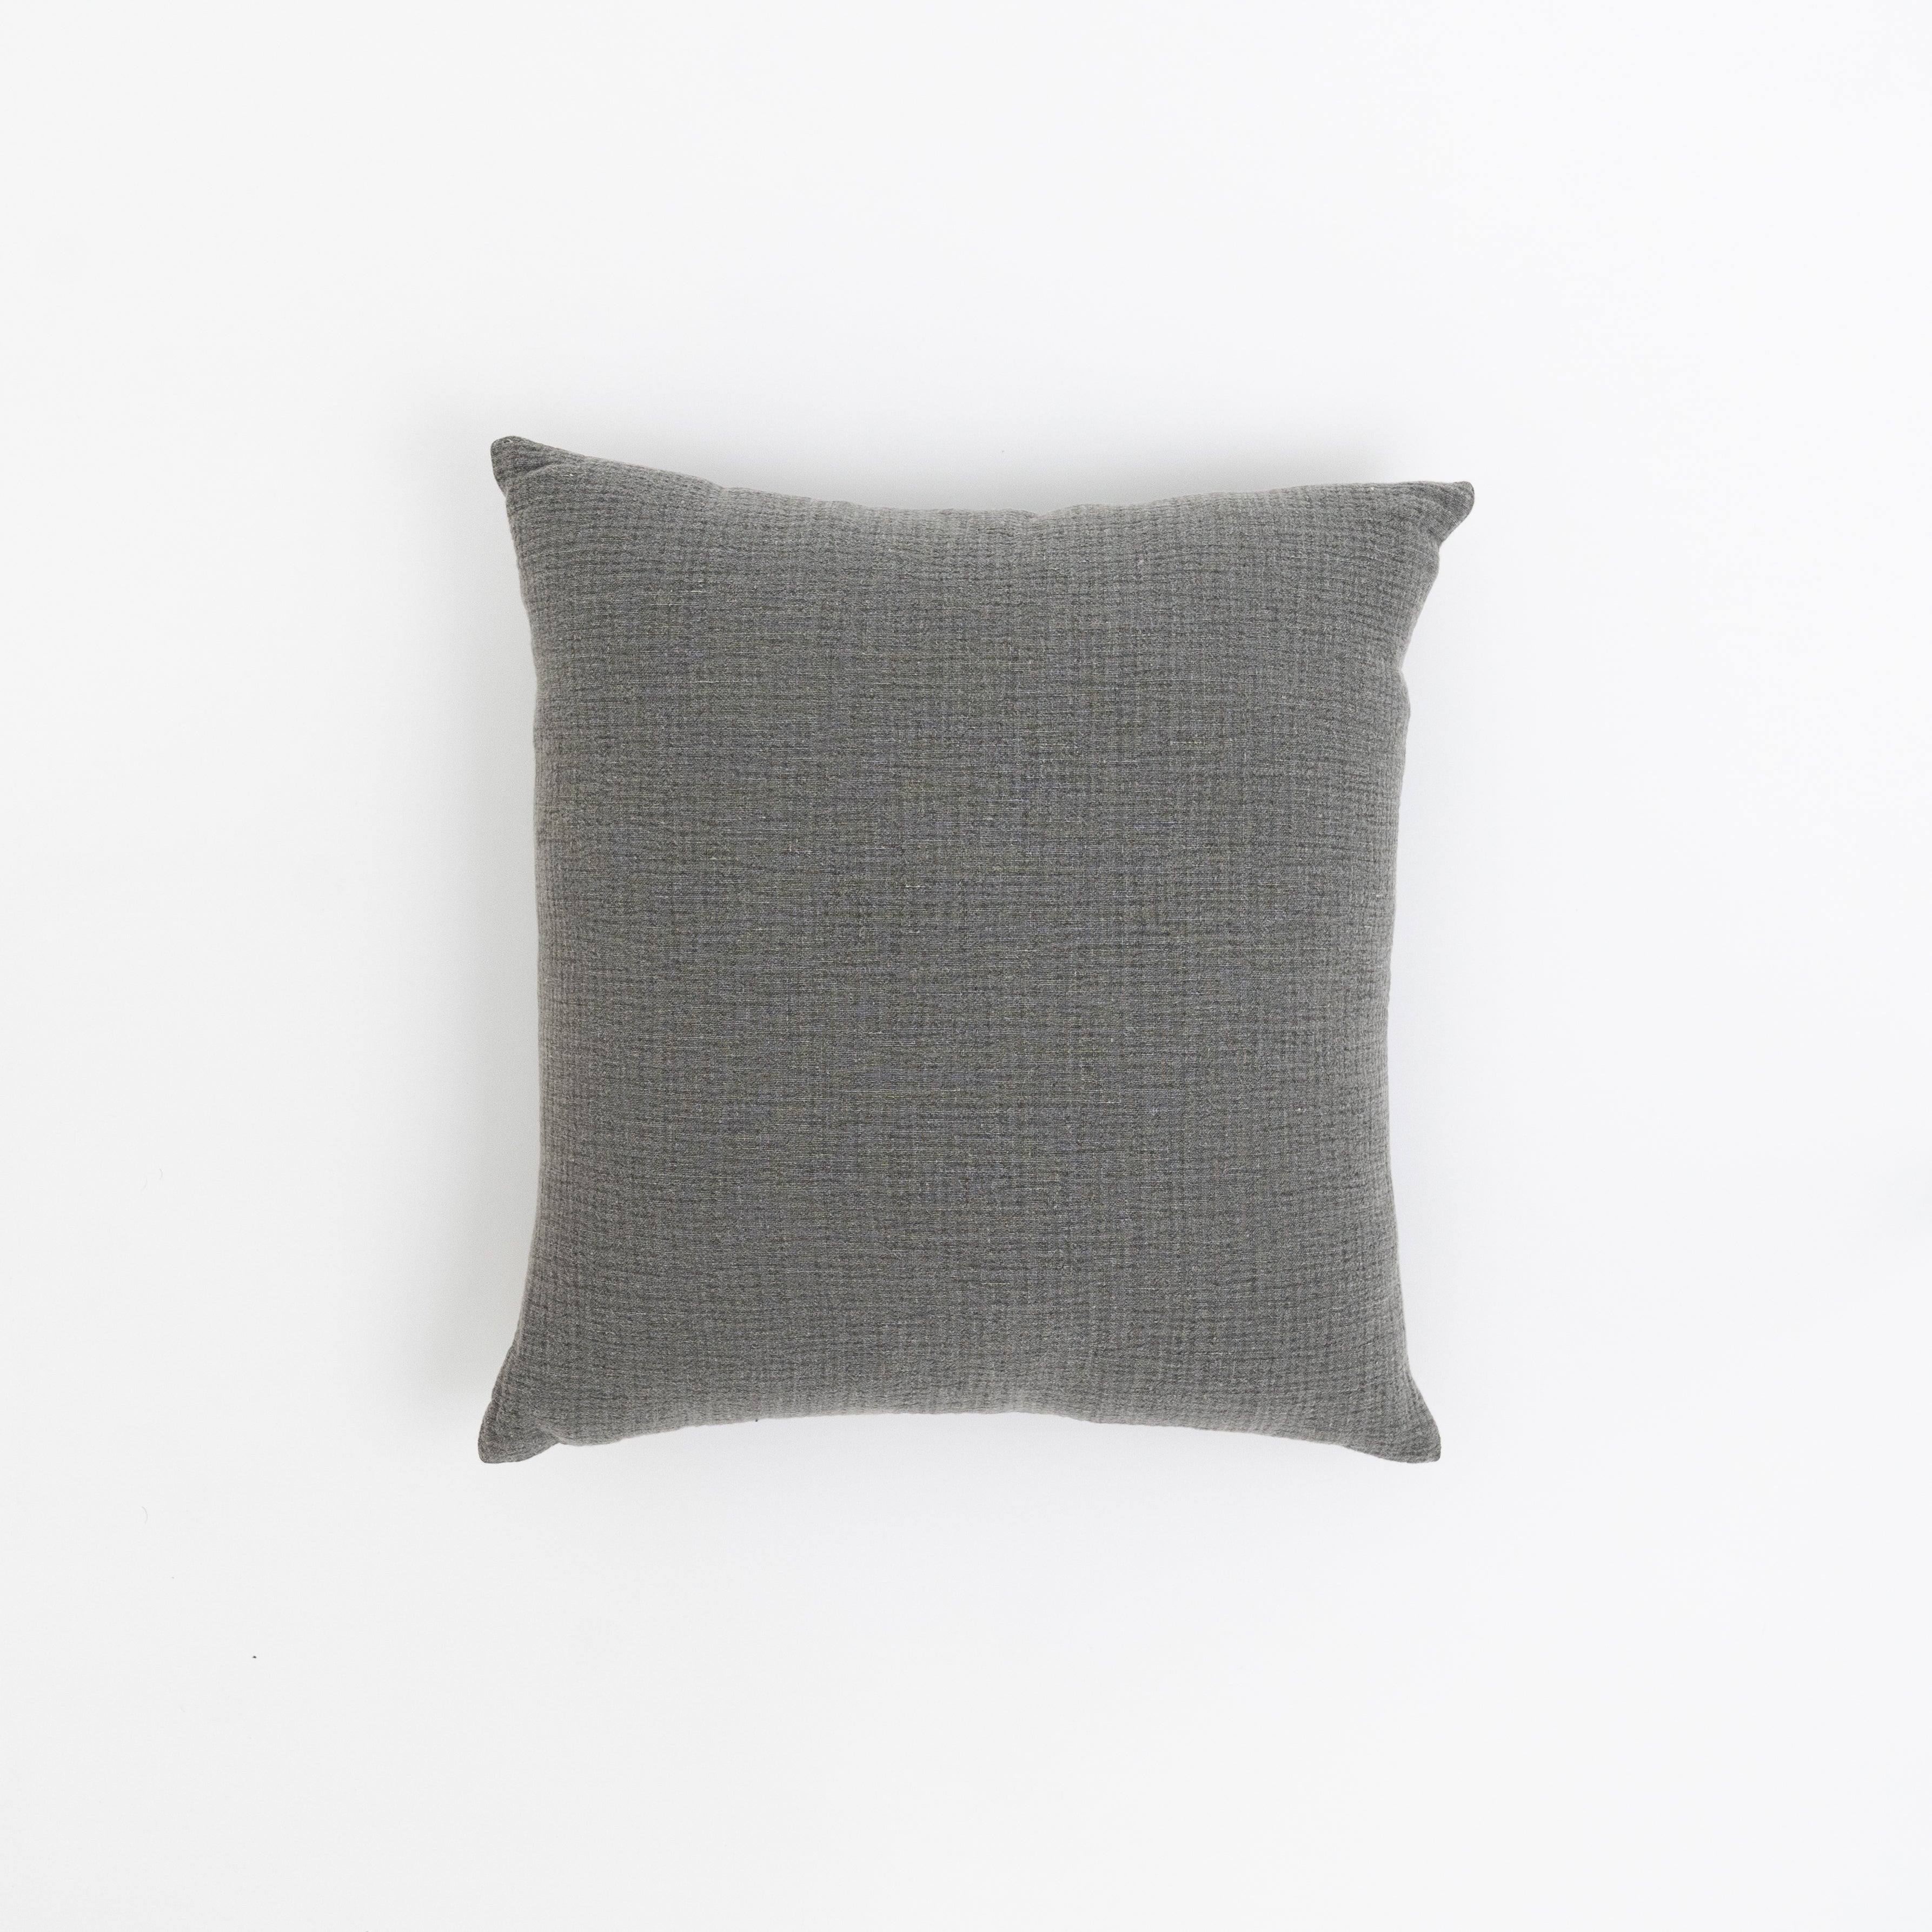 Cushion Cover Grey 45 x45cm  - WS Living - UAE - Cushions Wood and steel Furnitures - Dubai